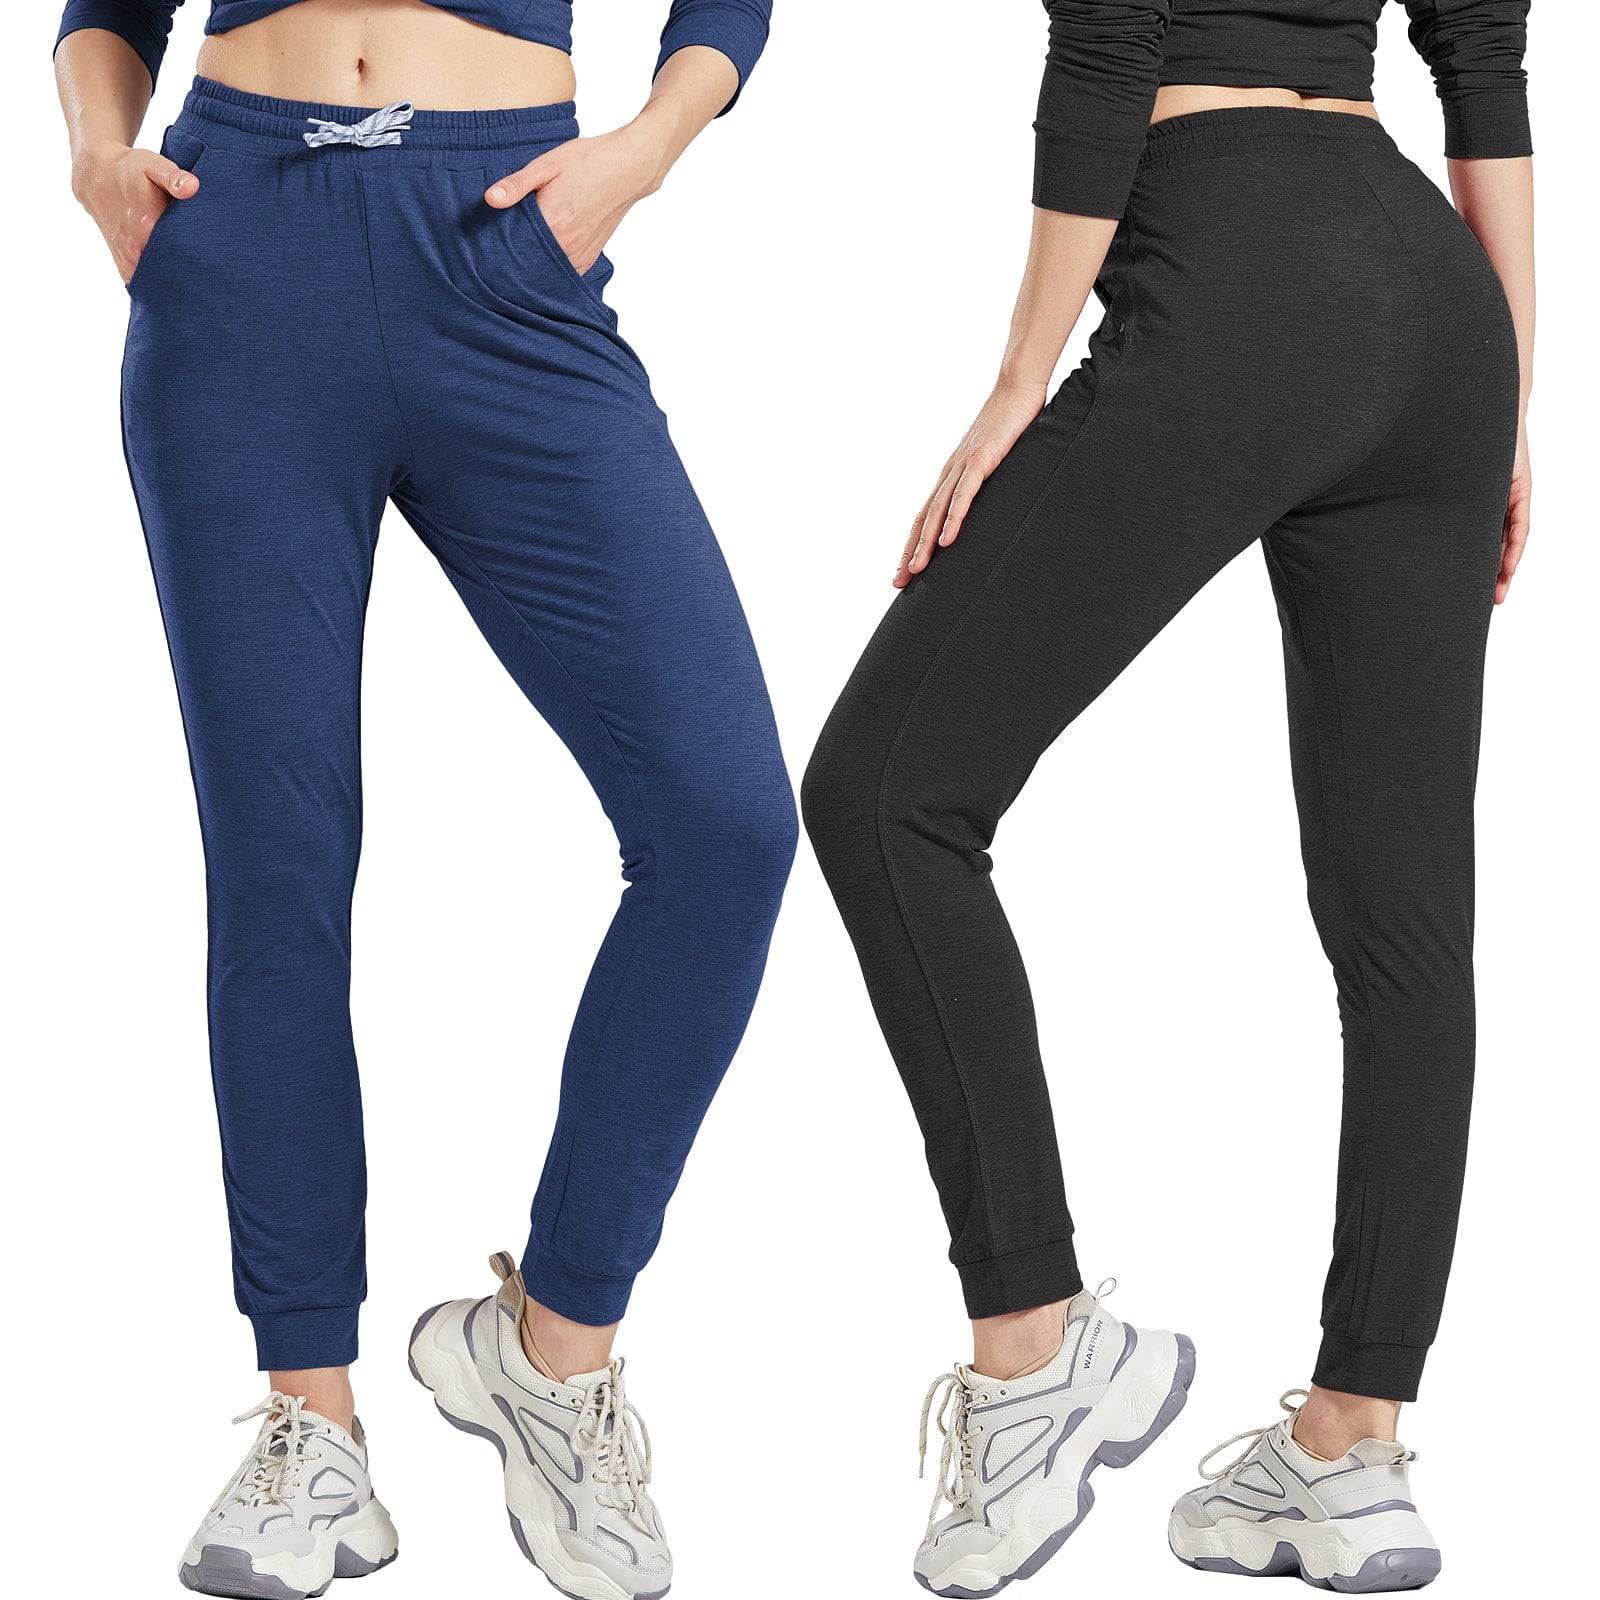 Women's Ultra-soft Workout Sweatpants Joggers with Pockets Women's Train & Active Pants Black Navy / S MIER